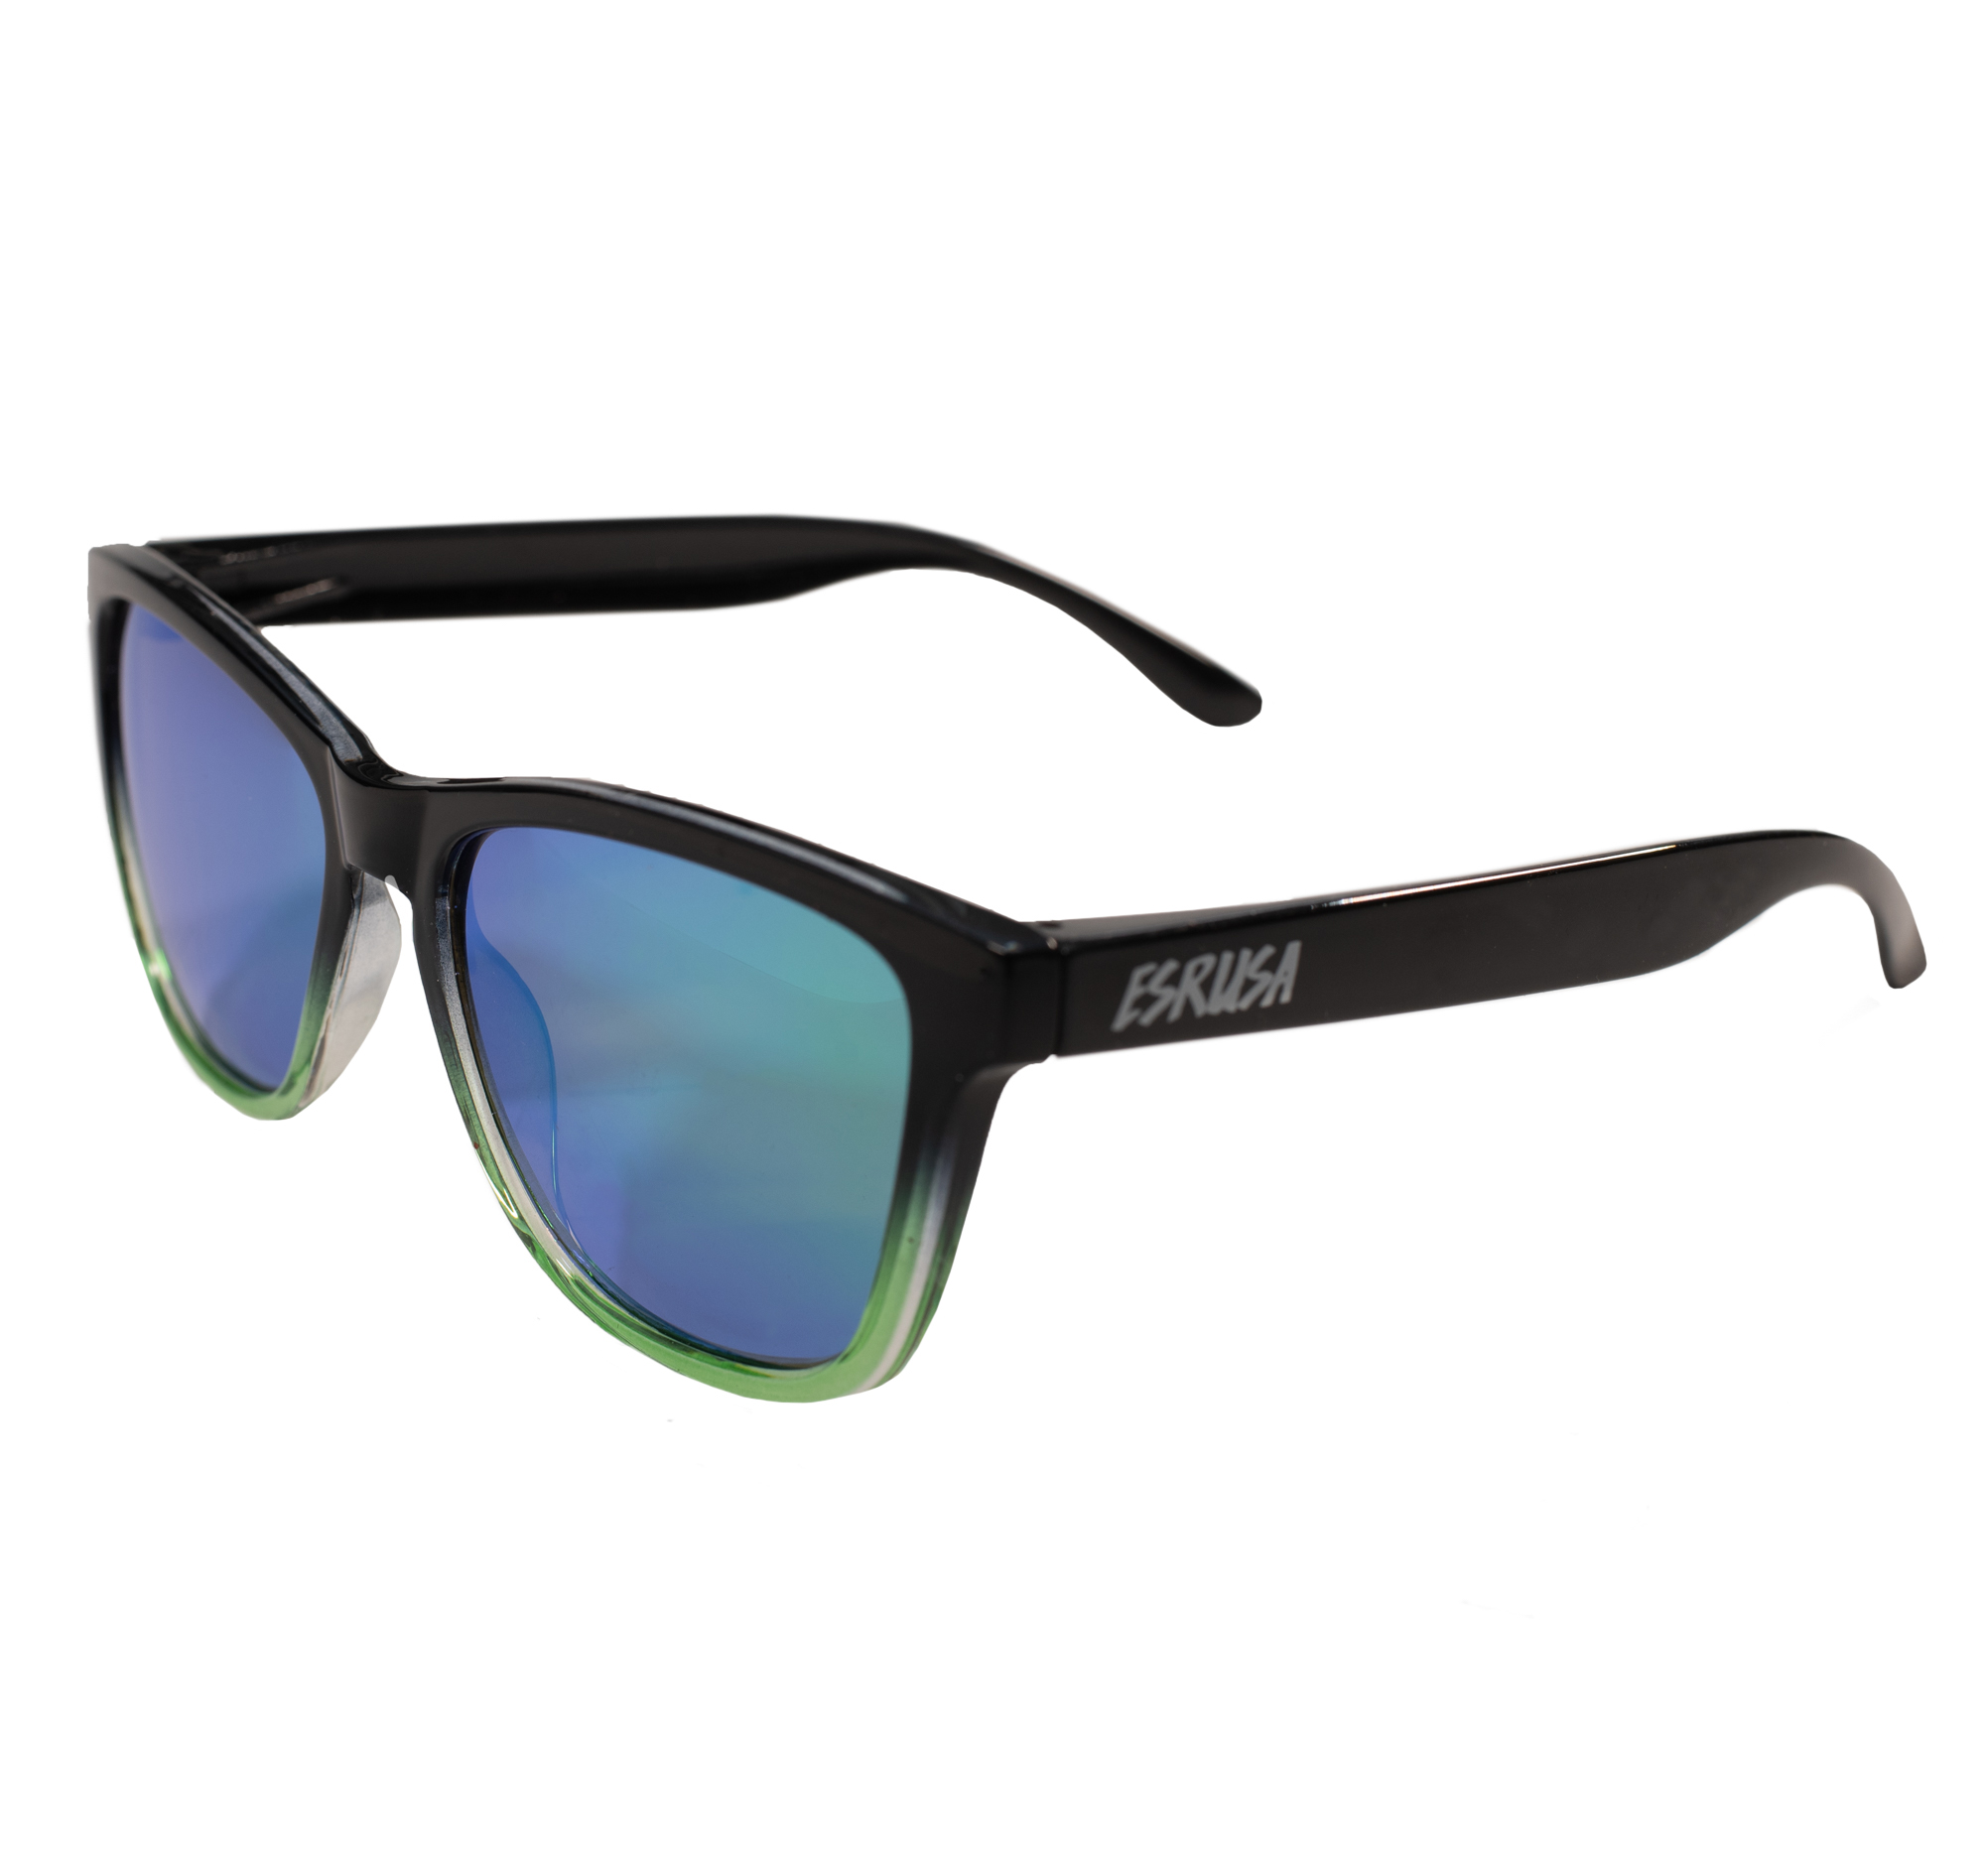 ESR USA Sunglasses | Black/Jade (Polarized) | Hard Case